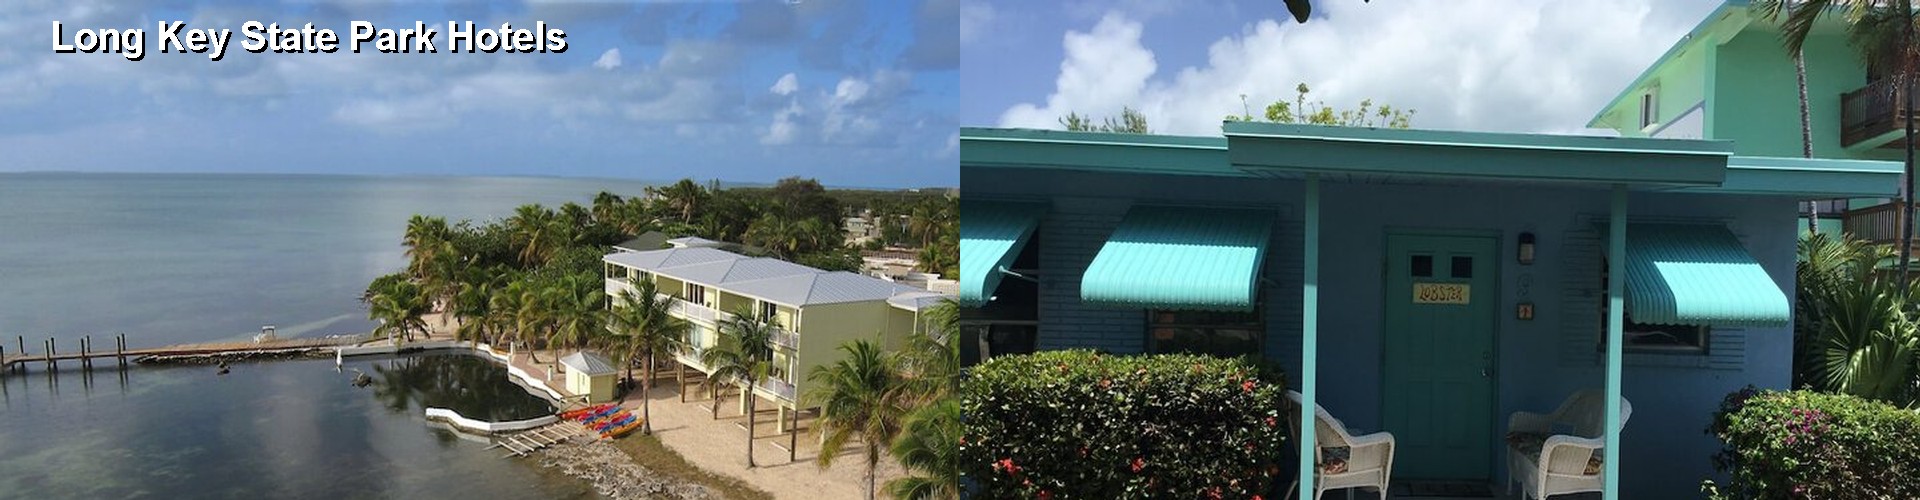 5 Best Hotels near Long Key State Park